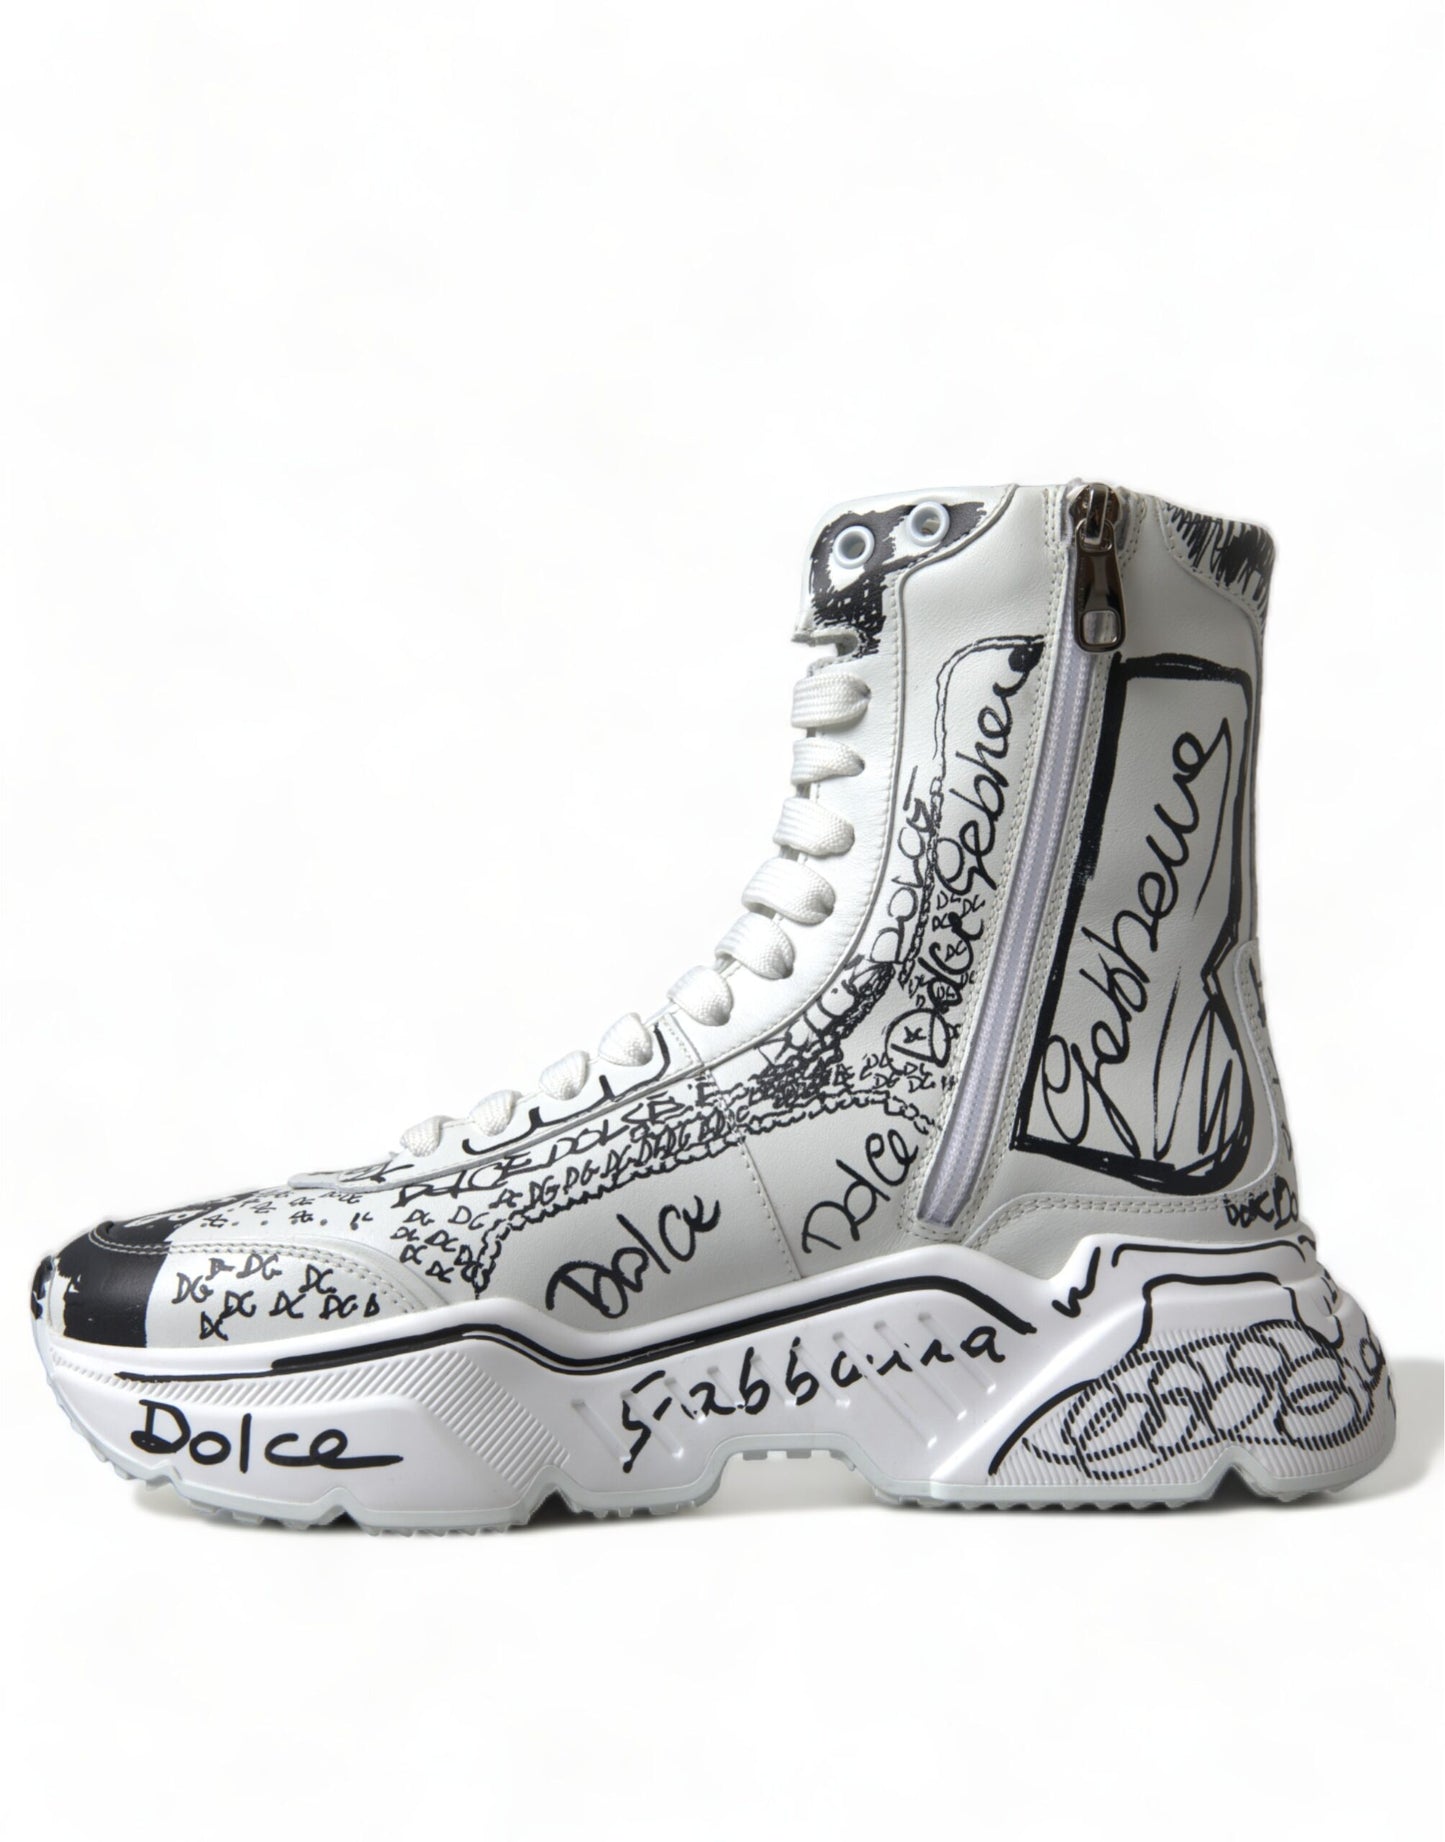 Dolce & Gabbana Daymaster Graffiti Print Mid Top Sneakers